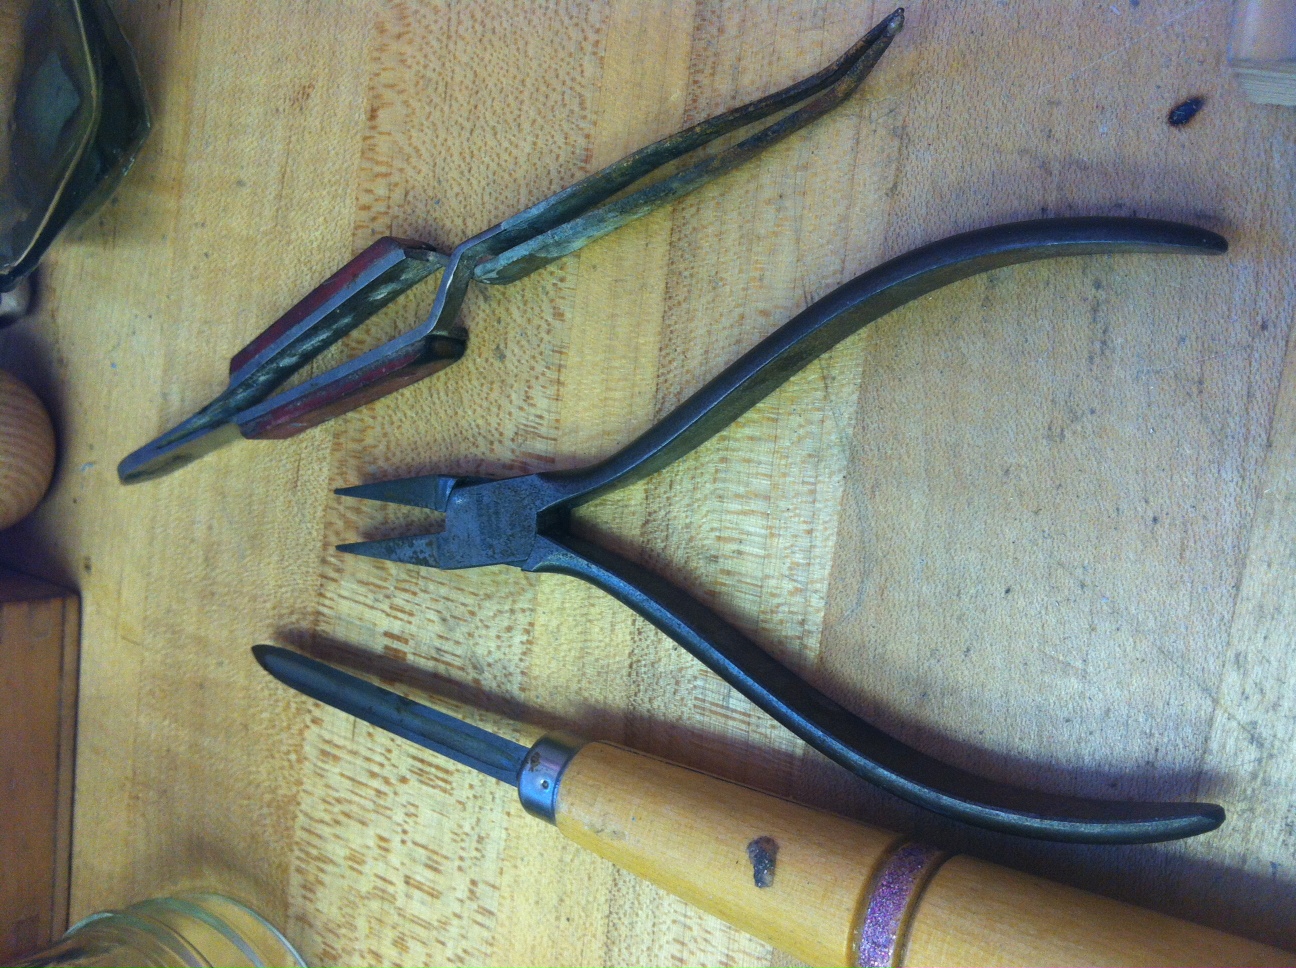 rusty tools - before image.JPG